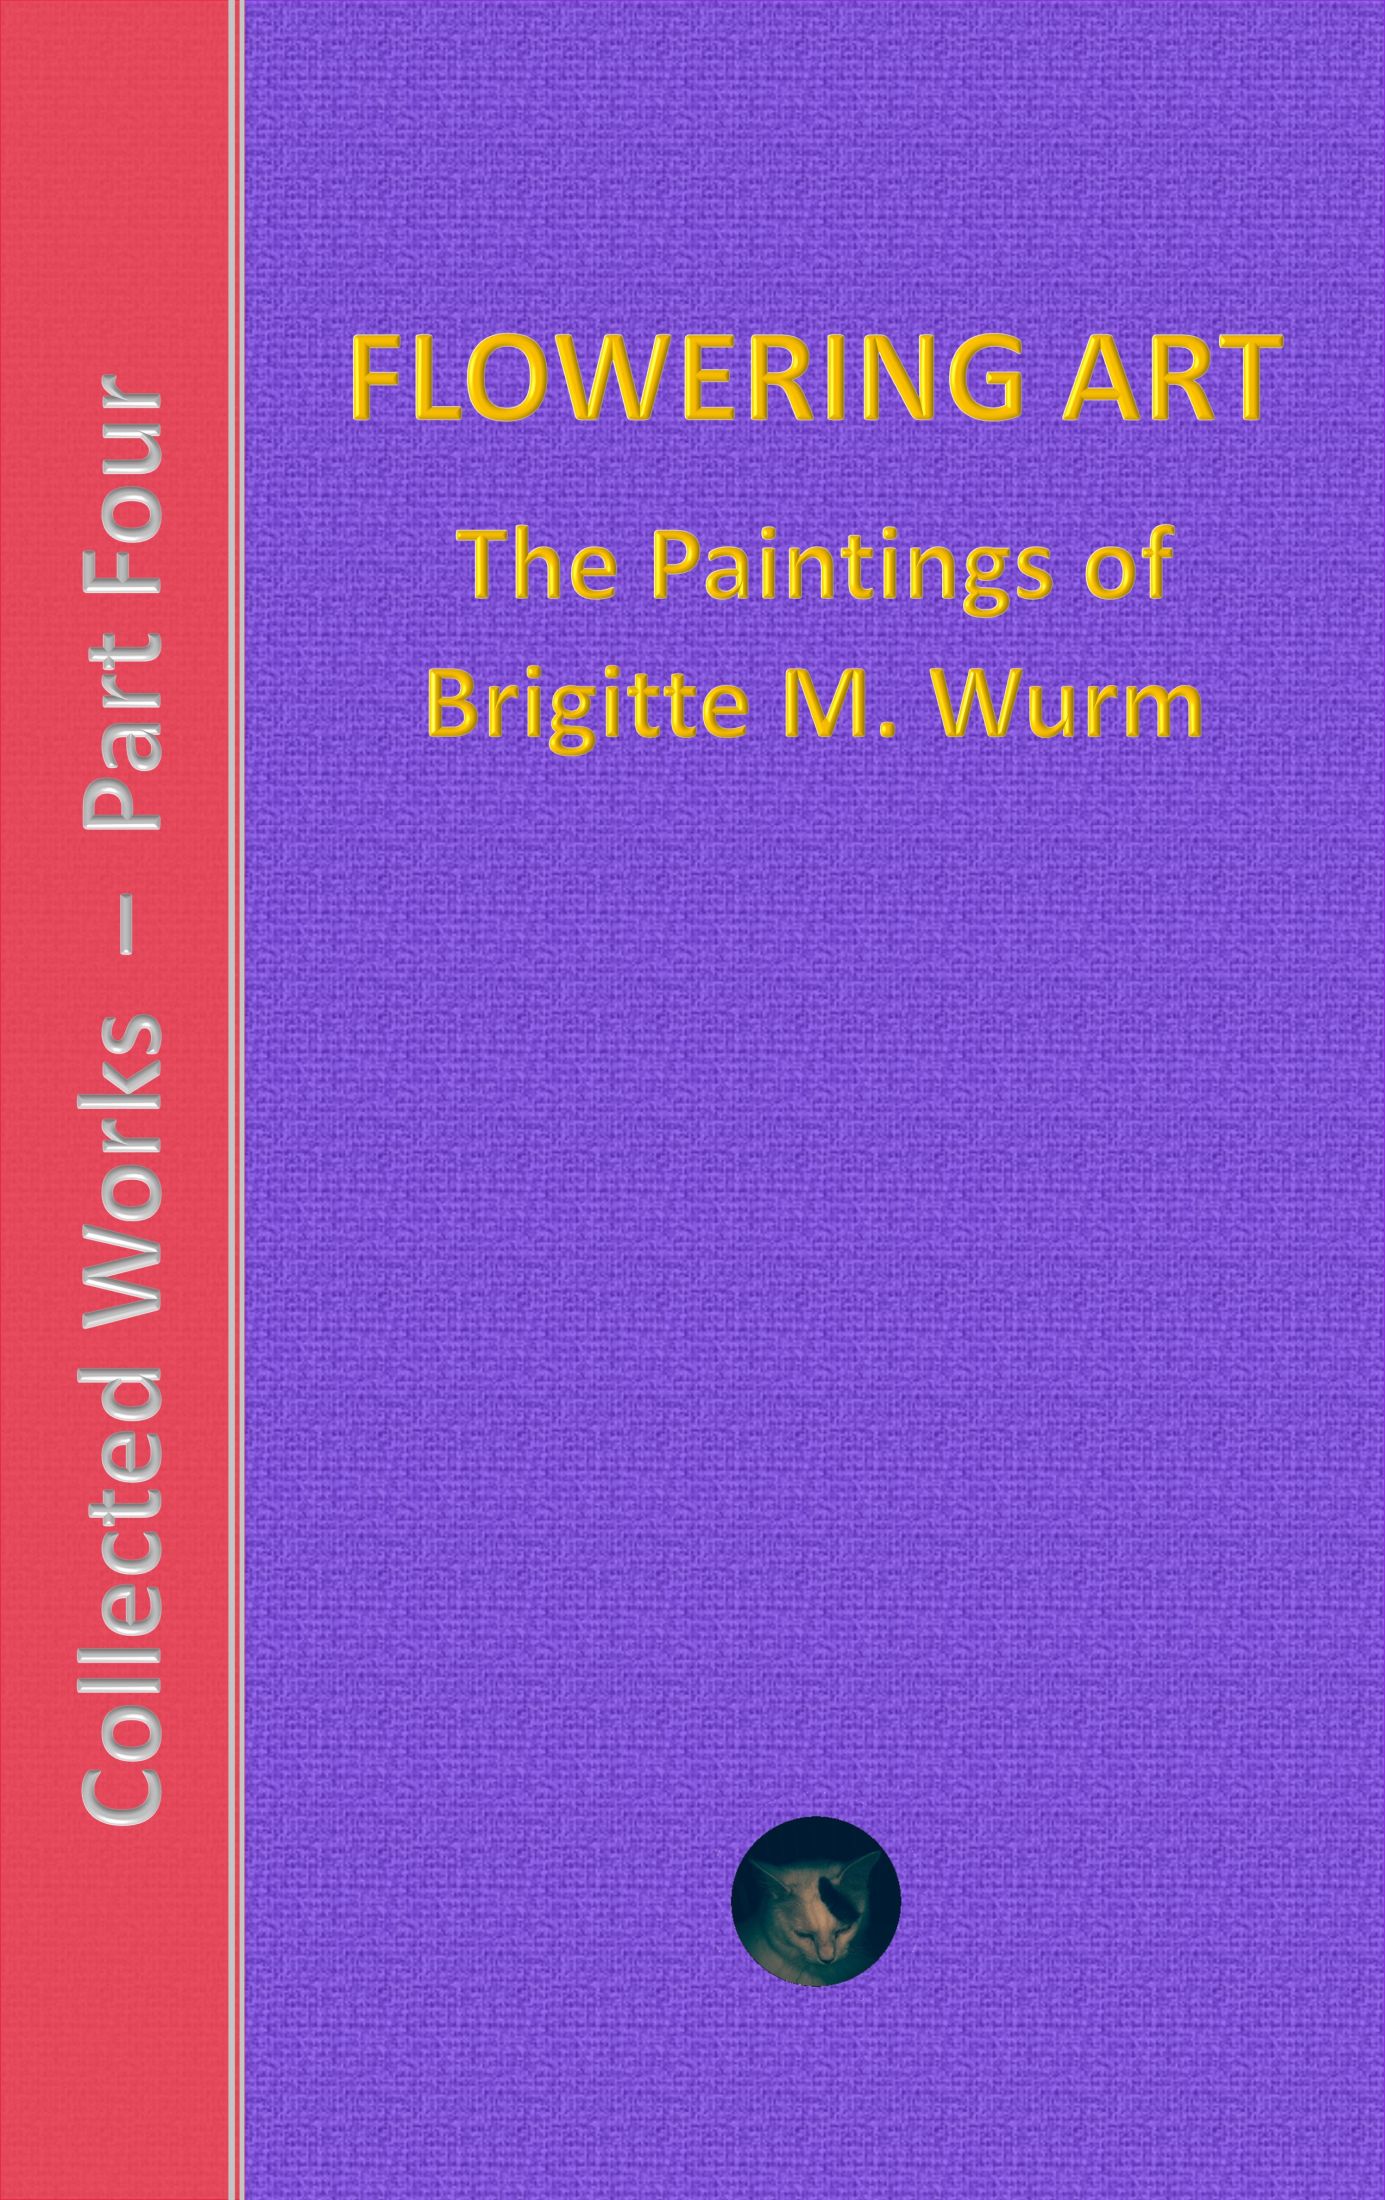 Brigitte M. Wurm: Collected Works - Part Four